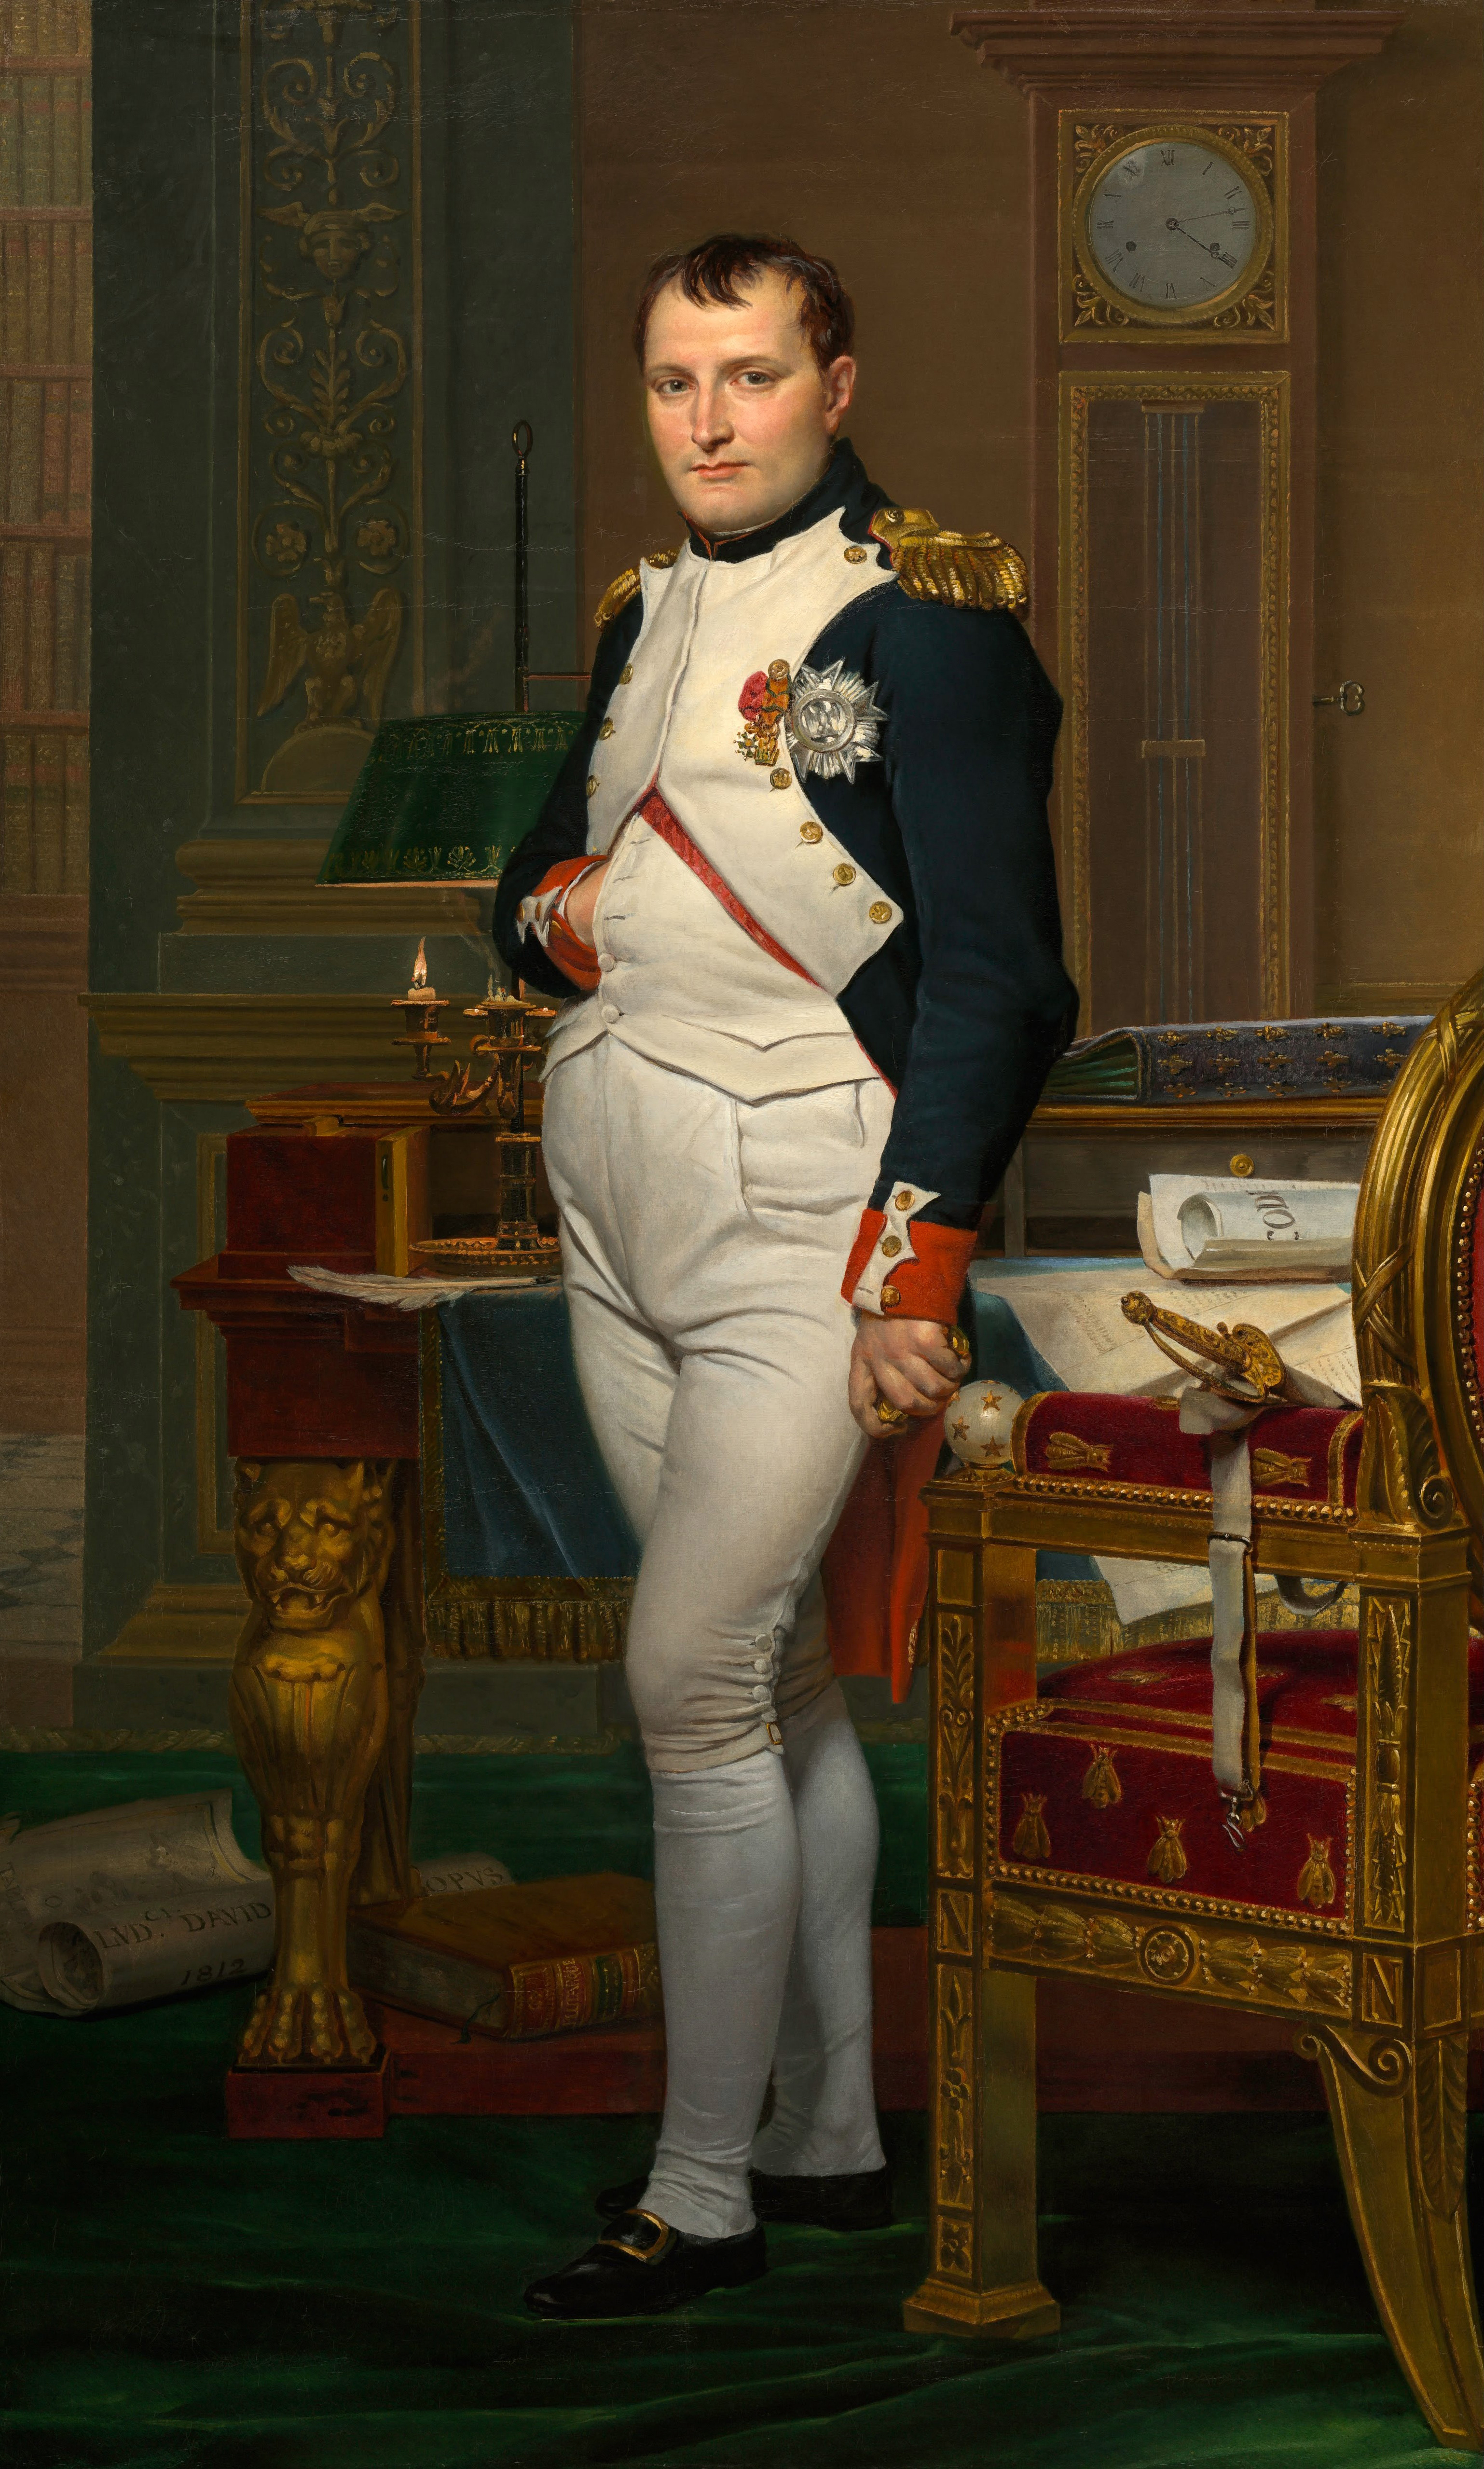 Napoleon pose